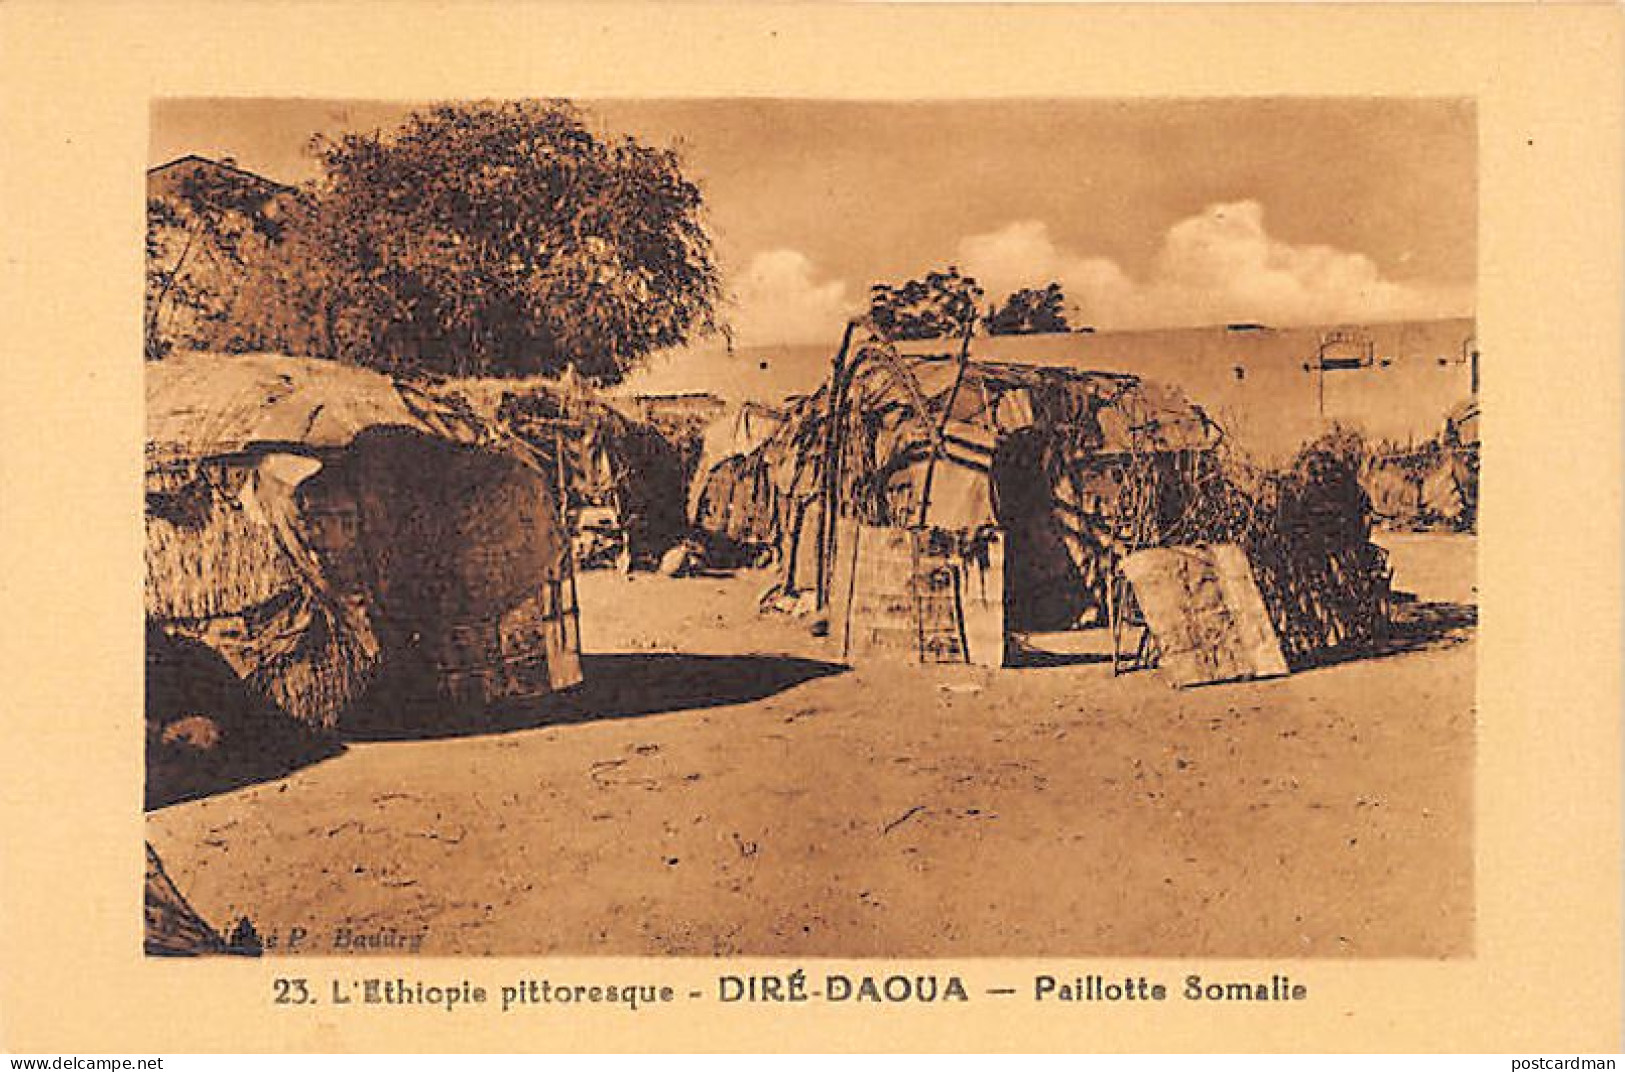 Ethiopia - DIRE DAWA - Somali Straw Hut - Publ. Printing Works Of The Dire Dawa Catholic Mission - Photographer P. Baudr - Ethiopië